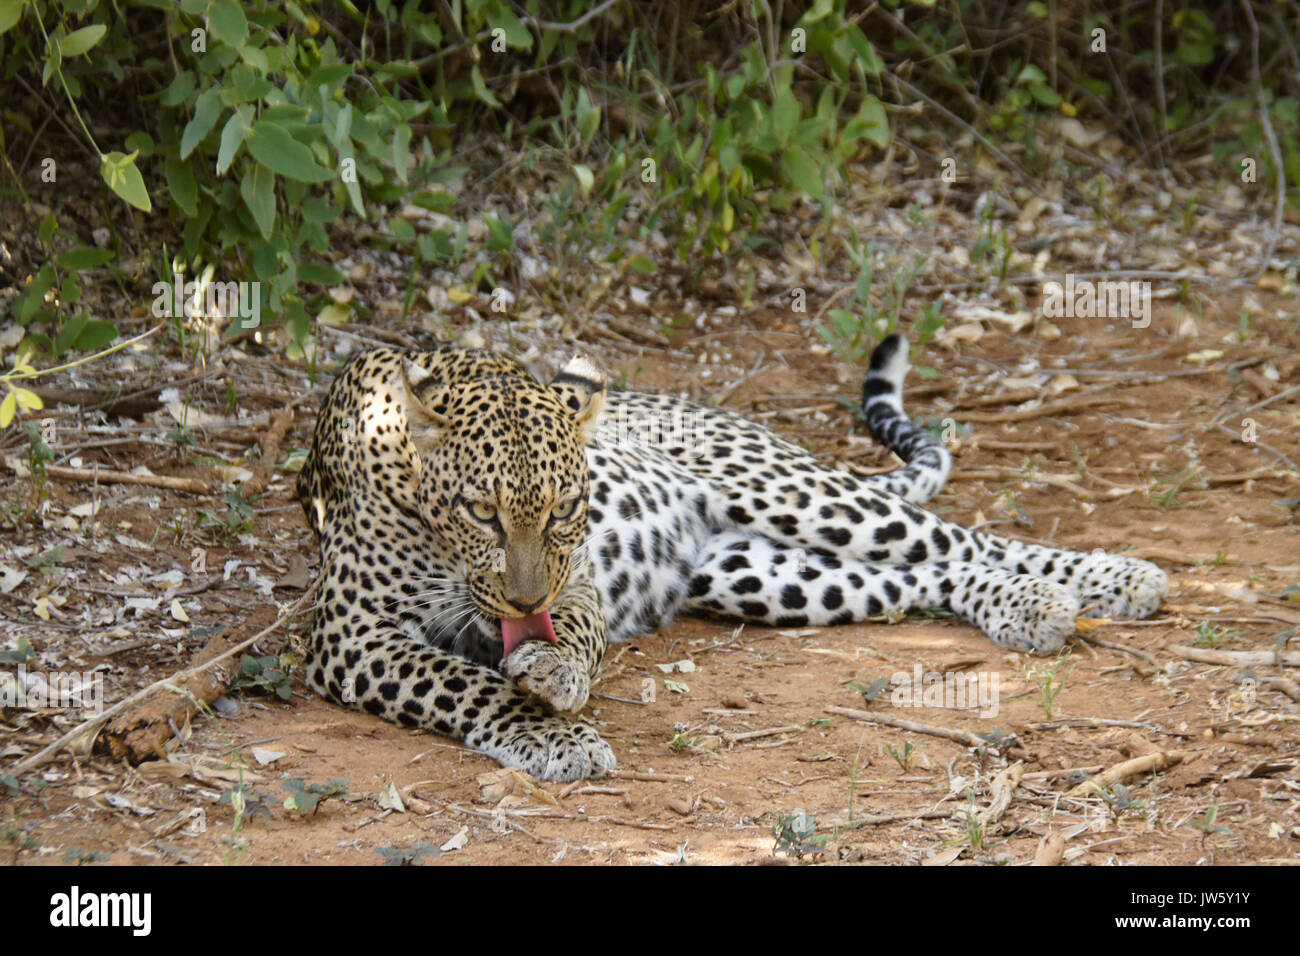 Léopard femelle lécher son paw (toilettage), Samburu Game Reserve, Kenya Banque D'Images